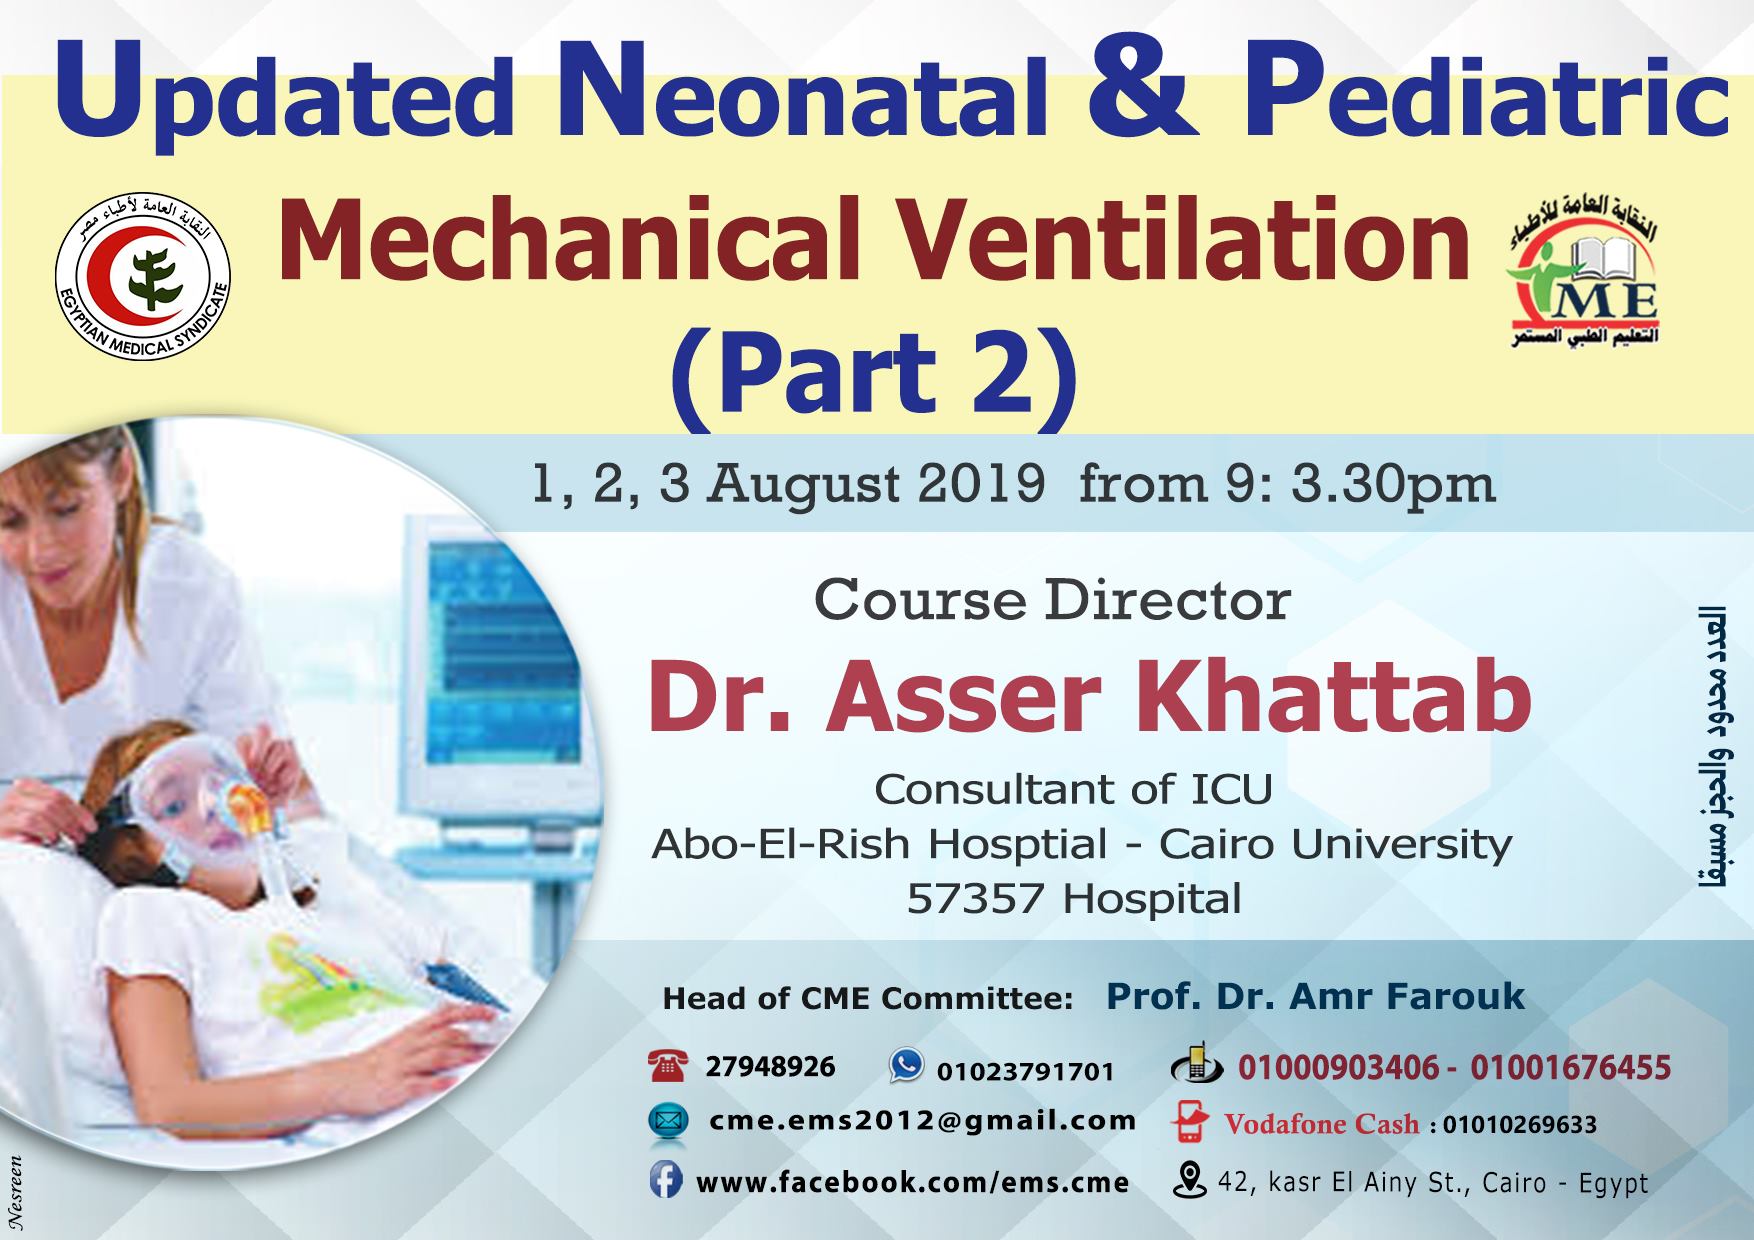 Updated Neonatal & Pediatric Mechanical Ventilation - part 2